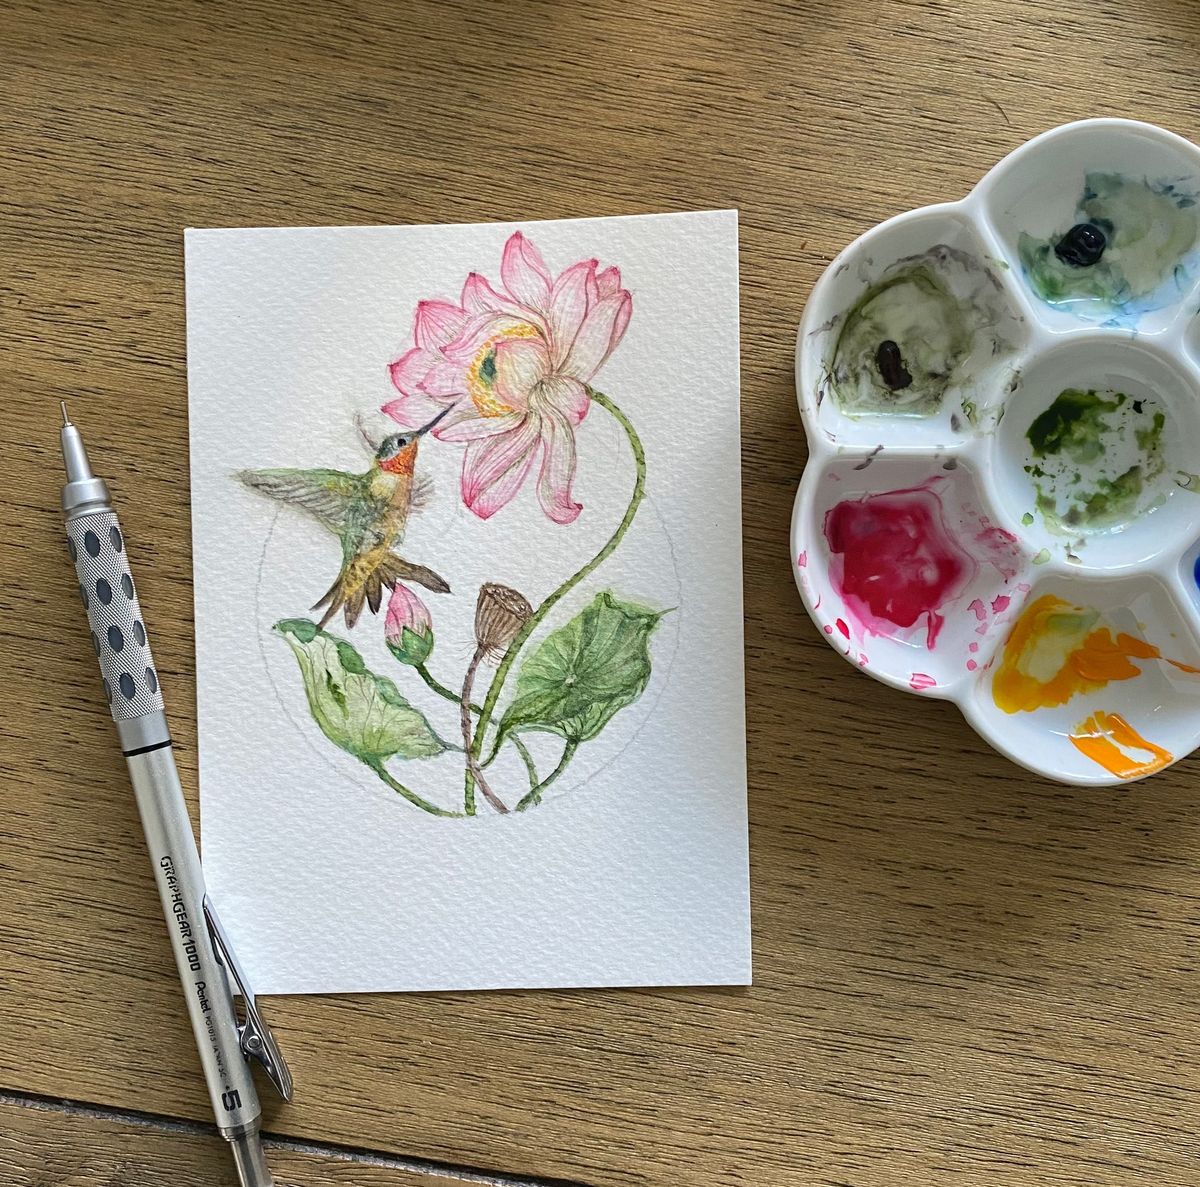 Artful Watercolors ~ A Beginner's Watercolor Workshop with Abhi